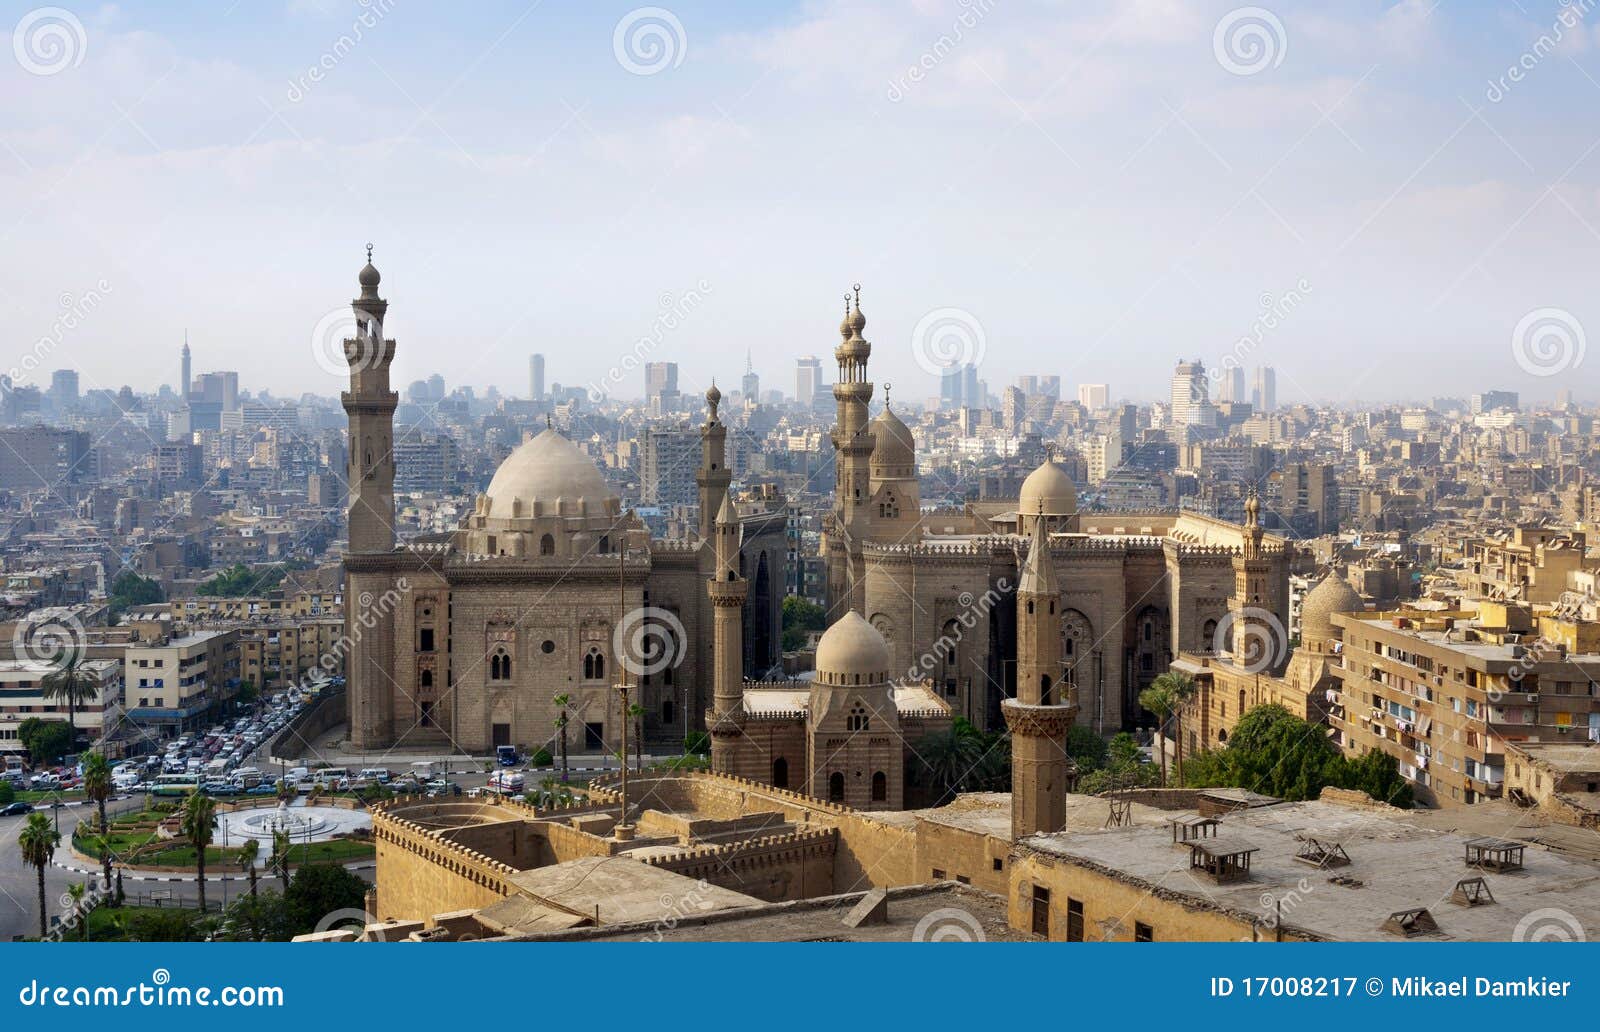 photo of cairo skyline, egypt